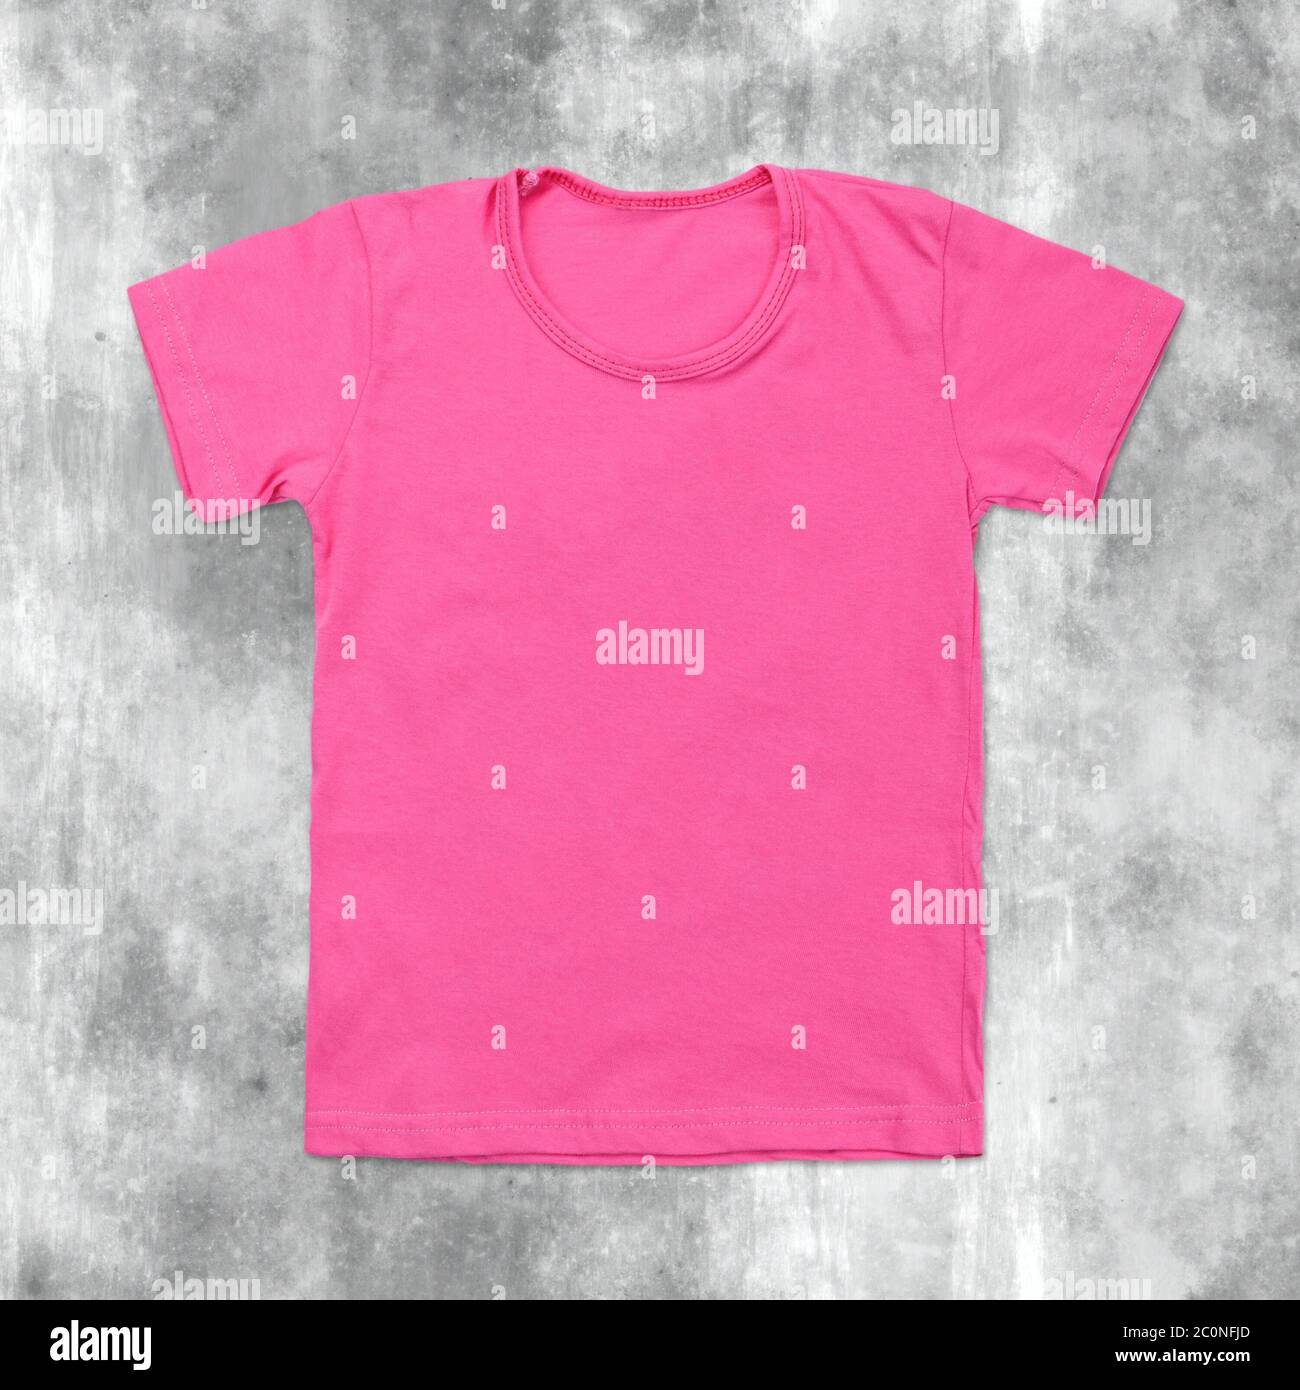 Pink blank t-shirt on dark cracked background Stock Photo